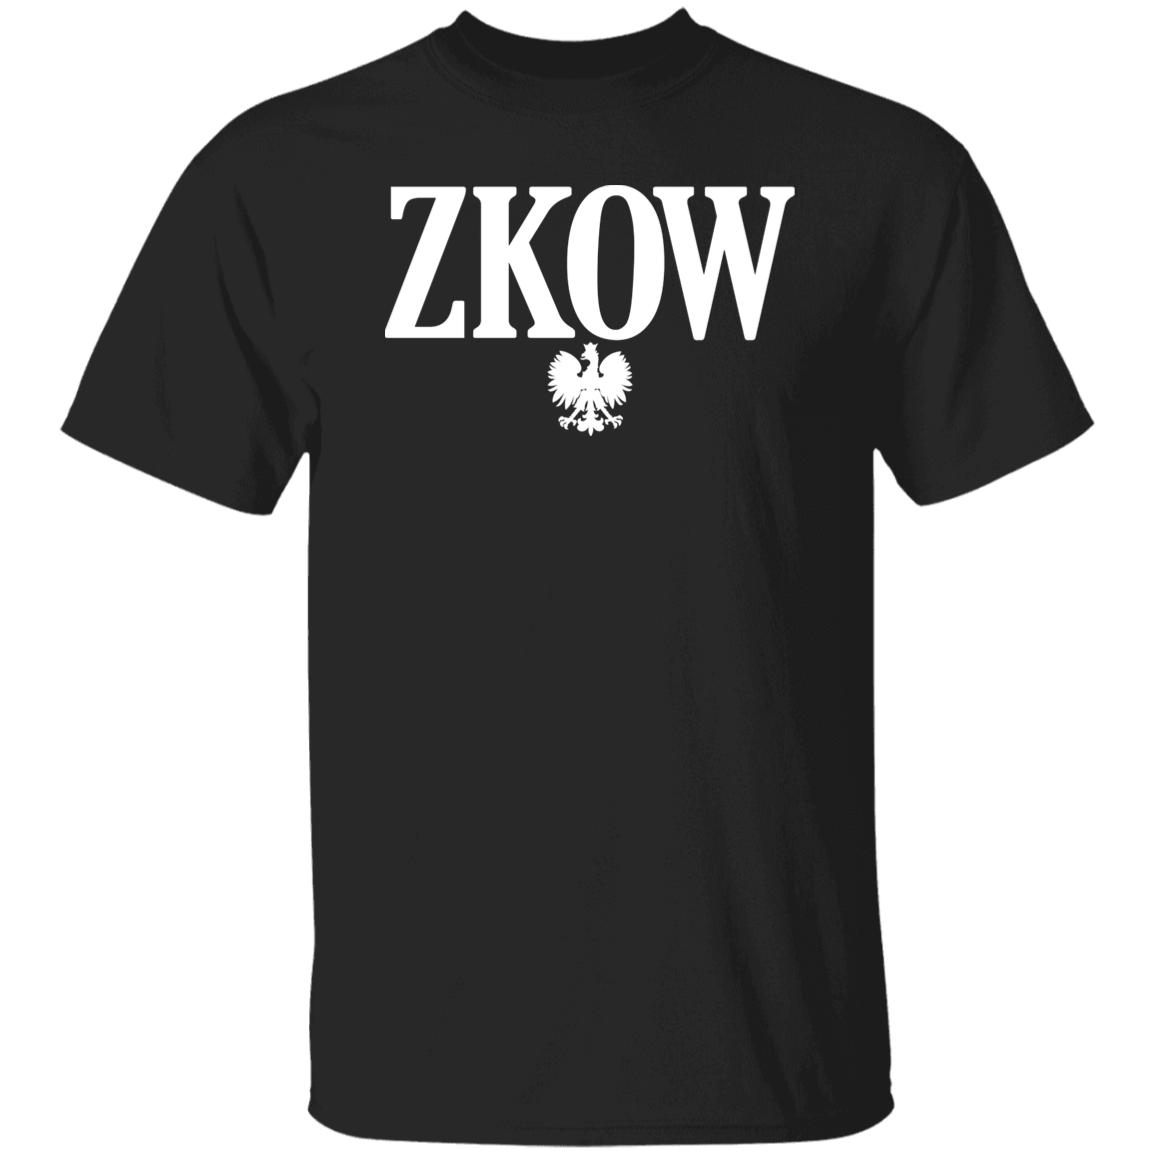 ZKOW Polish Surname Ending Apparel CustomCat G500 5.3 oz. T-Shirt Black S